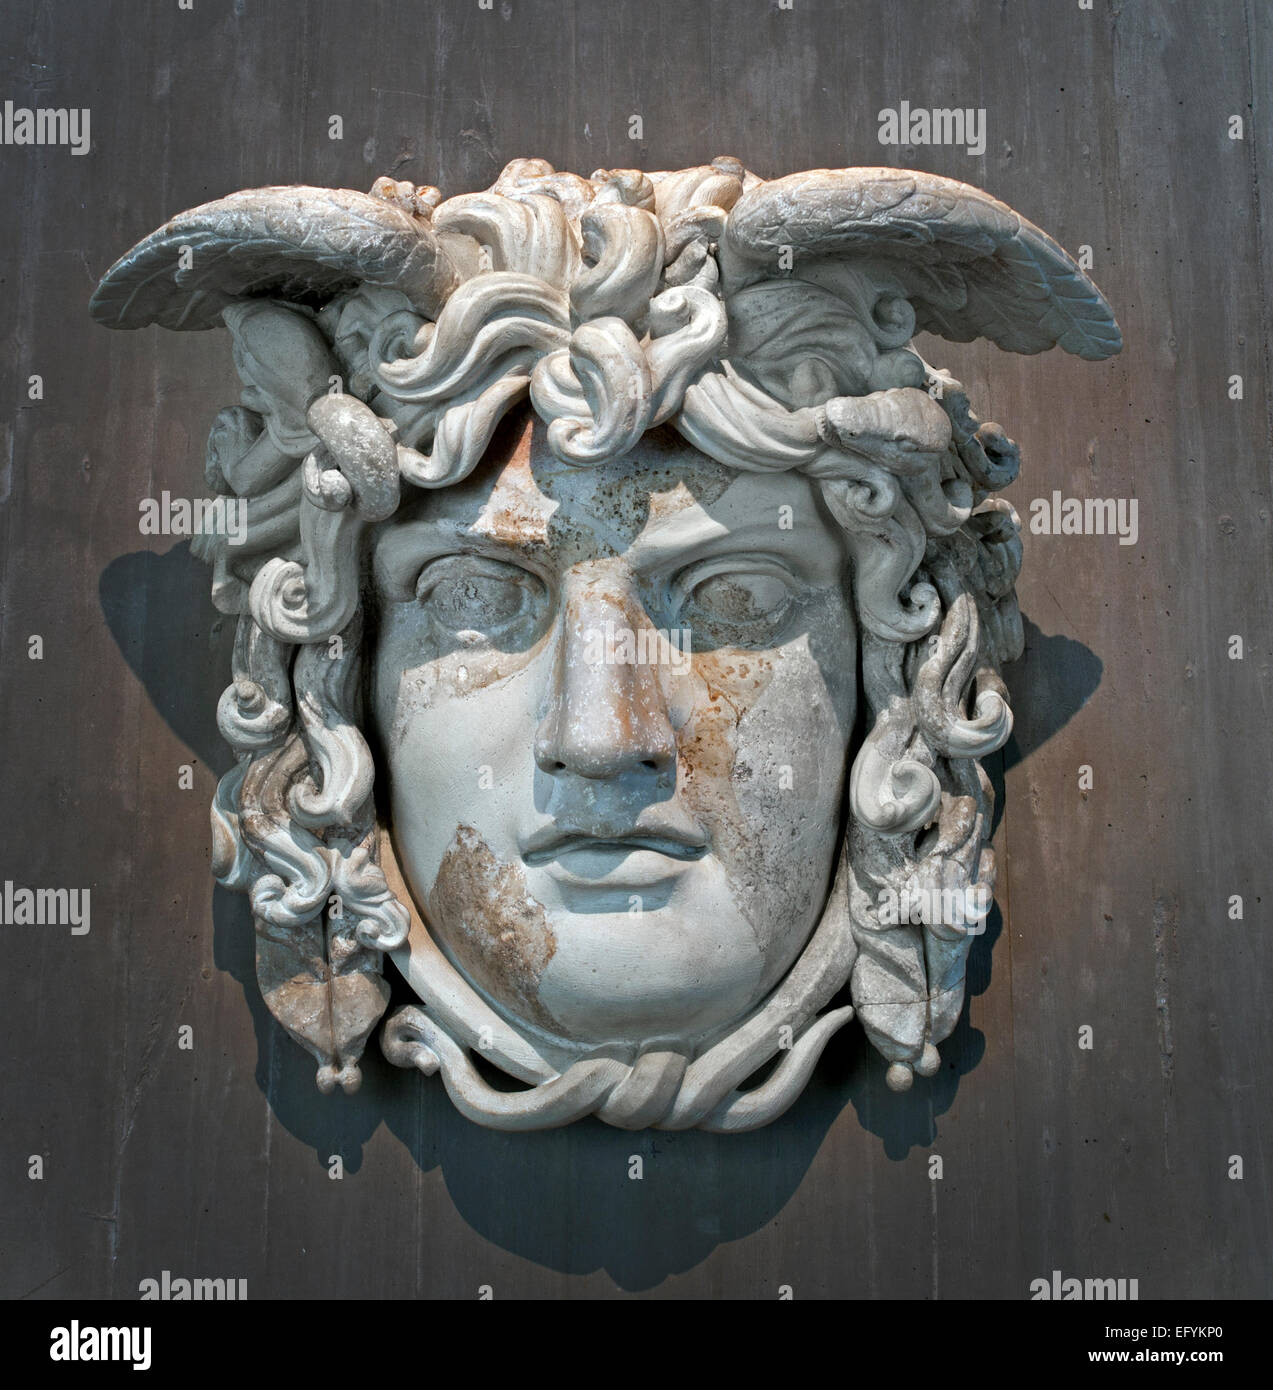 Maschera Romana Immagini e Fotos Stock - Alamy